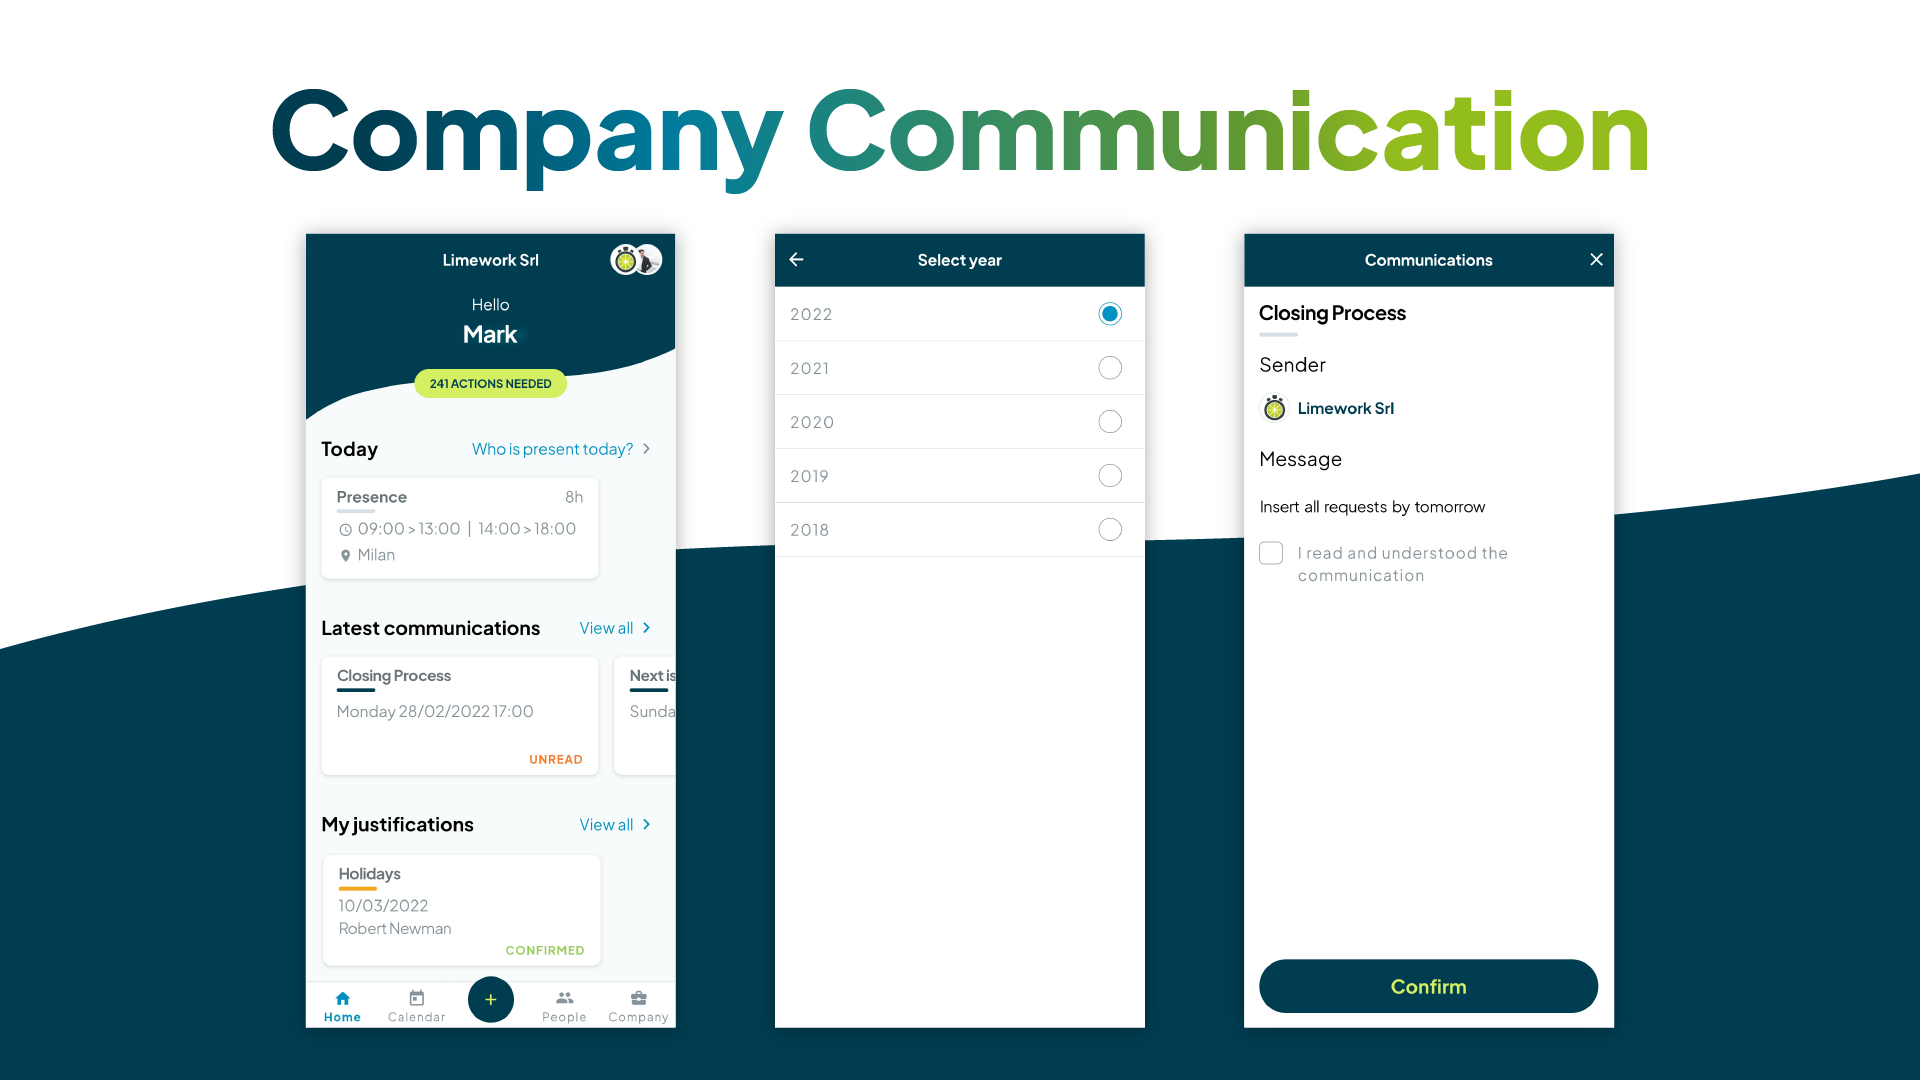 Company Communication